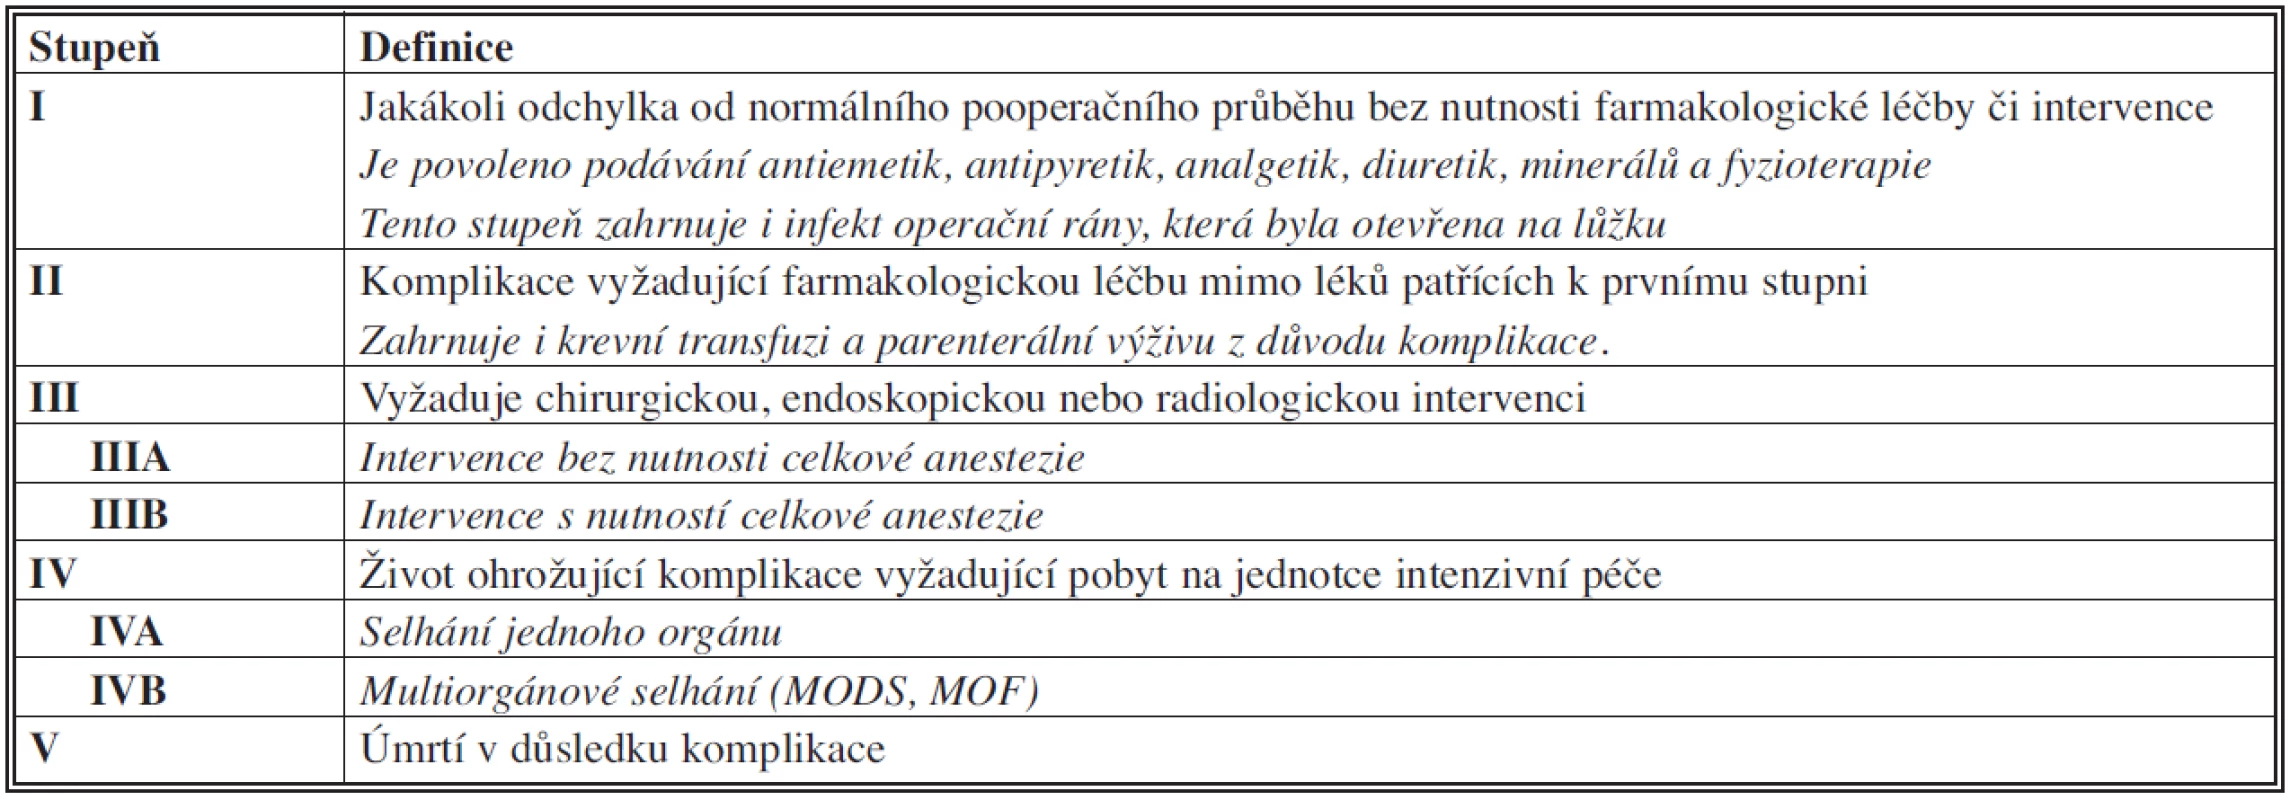 Klasifikace chirurgických komplikací (Clavien – Dindo, 2004) [3]
Tab. 1: Classification of surgical complications (Clavien – Dindo, 2004) [3]